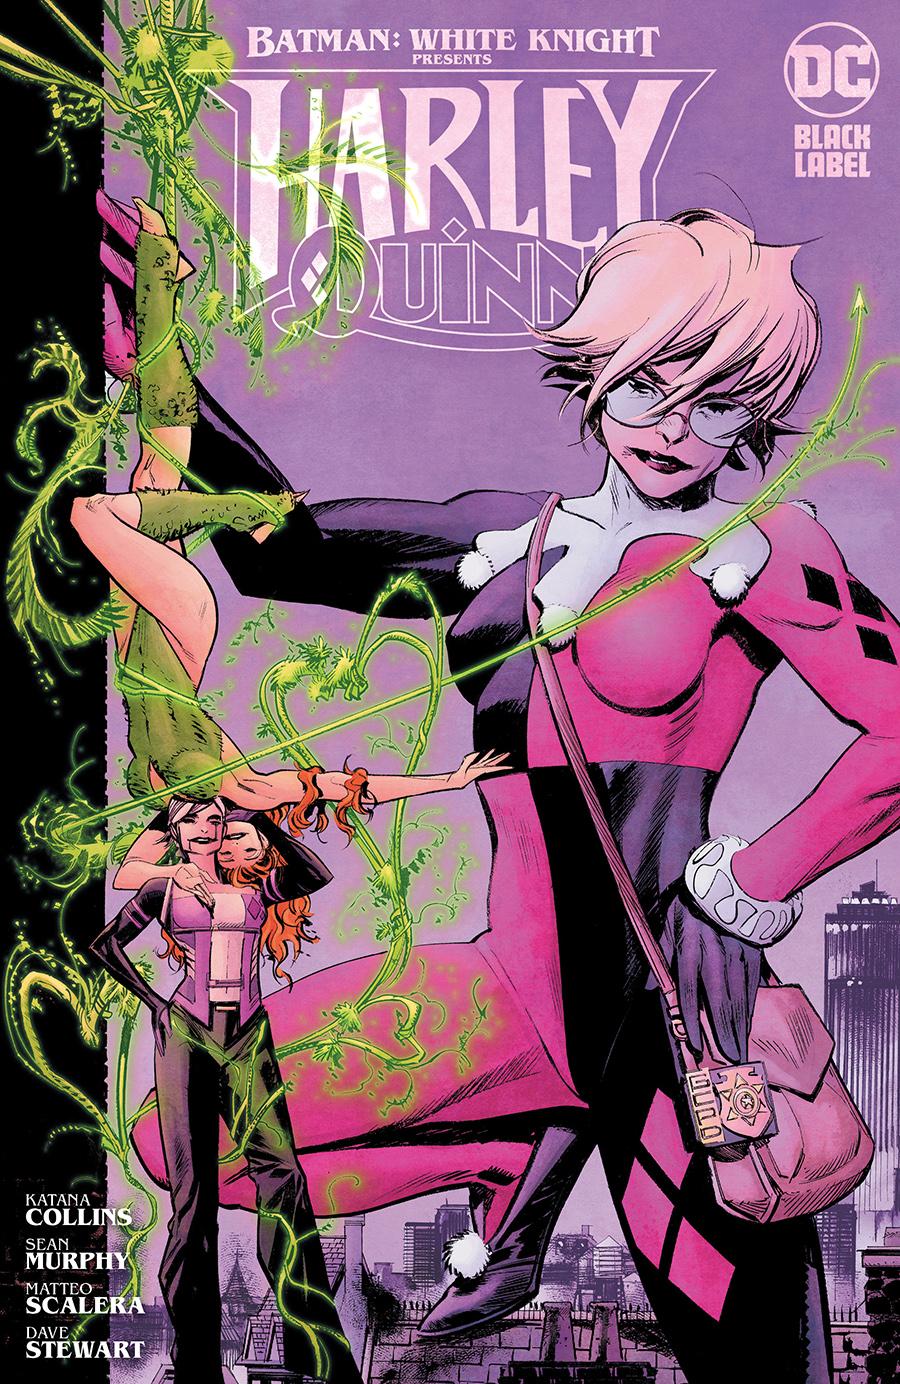 BATMAN WHITE KNIGHT PRESENTS HARLEY QUINN #2 (OF 6) CVR A SEAN MURPHY  Comics 2020 – Cosmic Comics